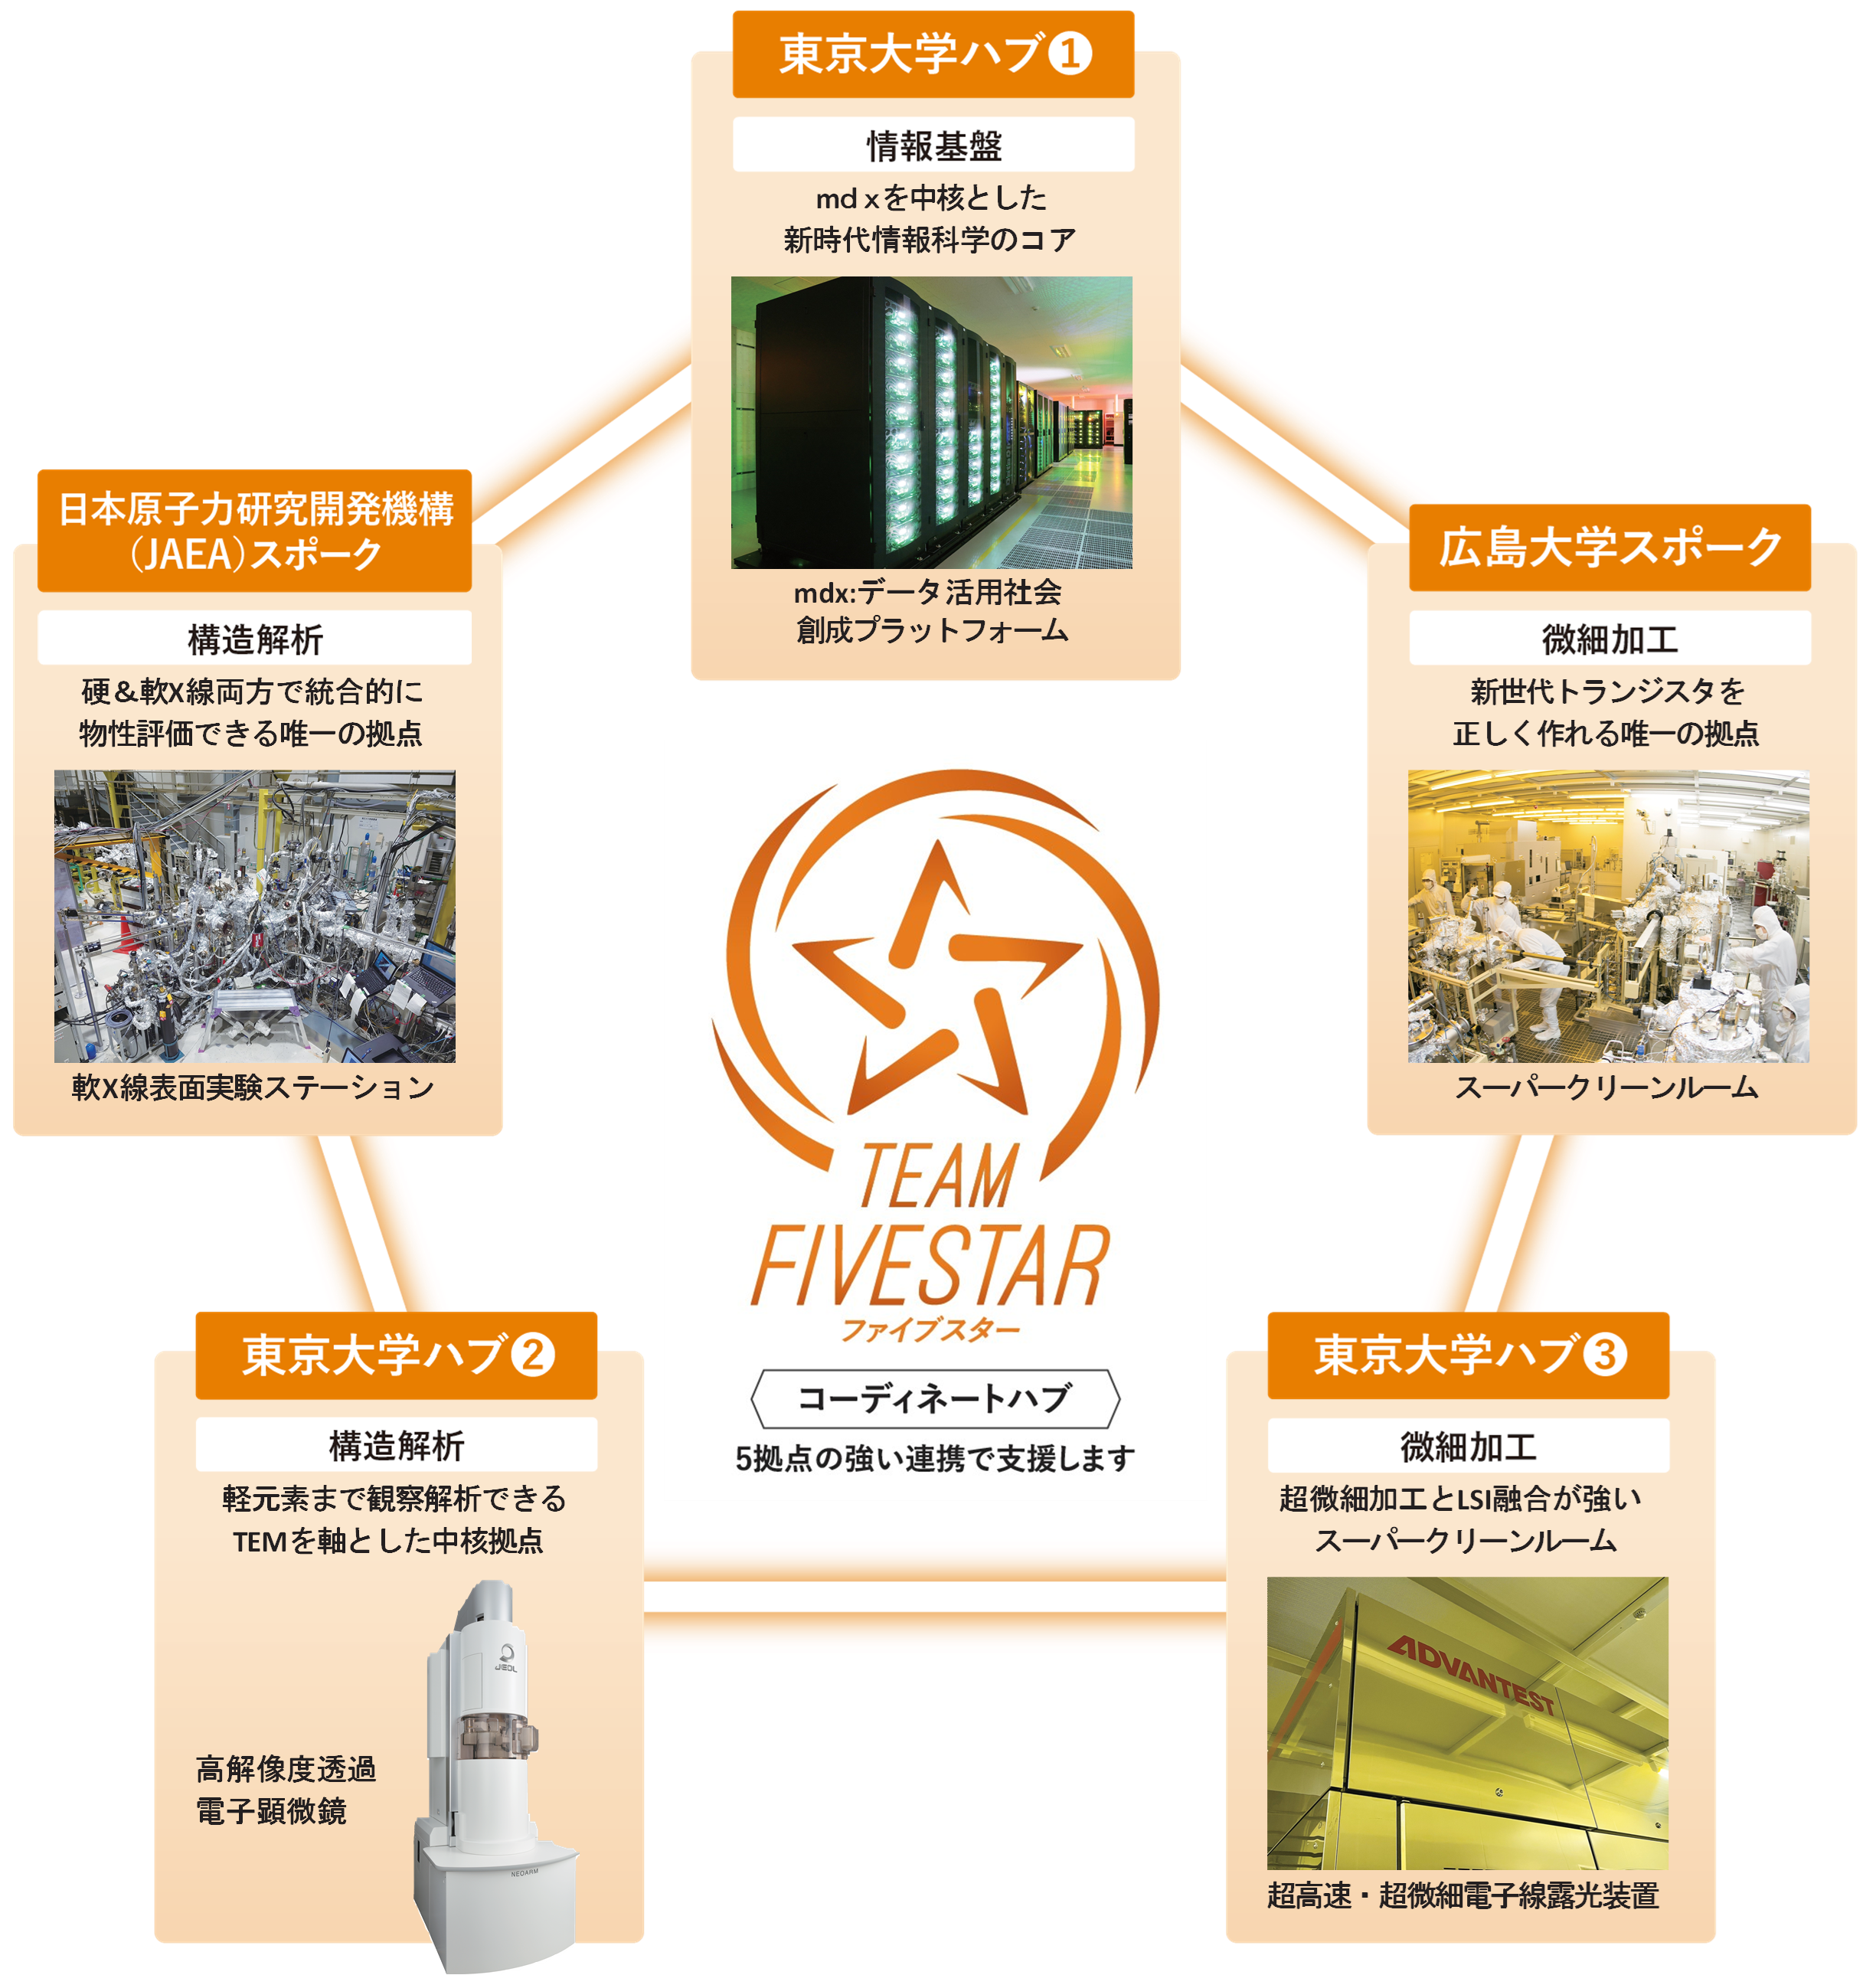 Implementation system (University of Tokyo Hub)